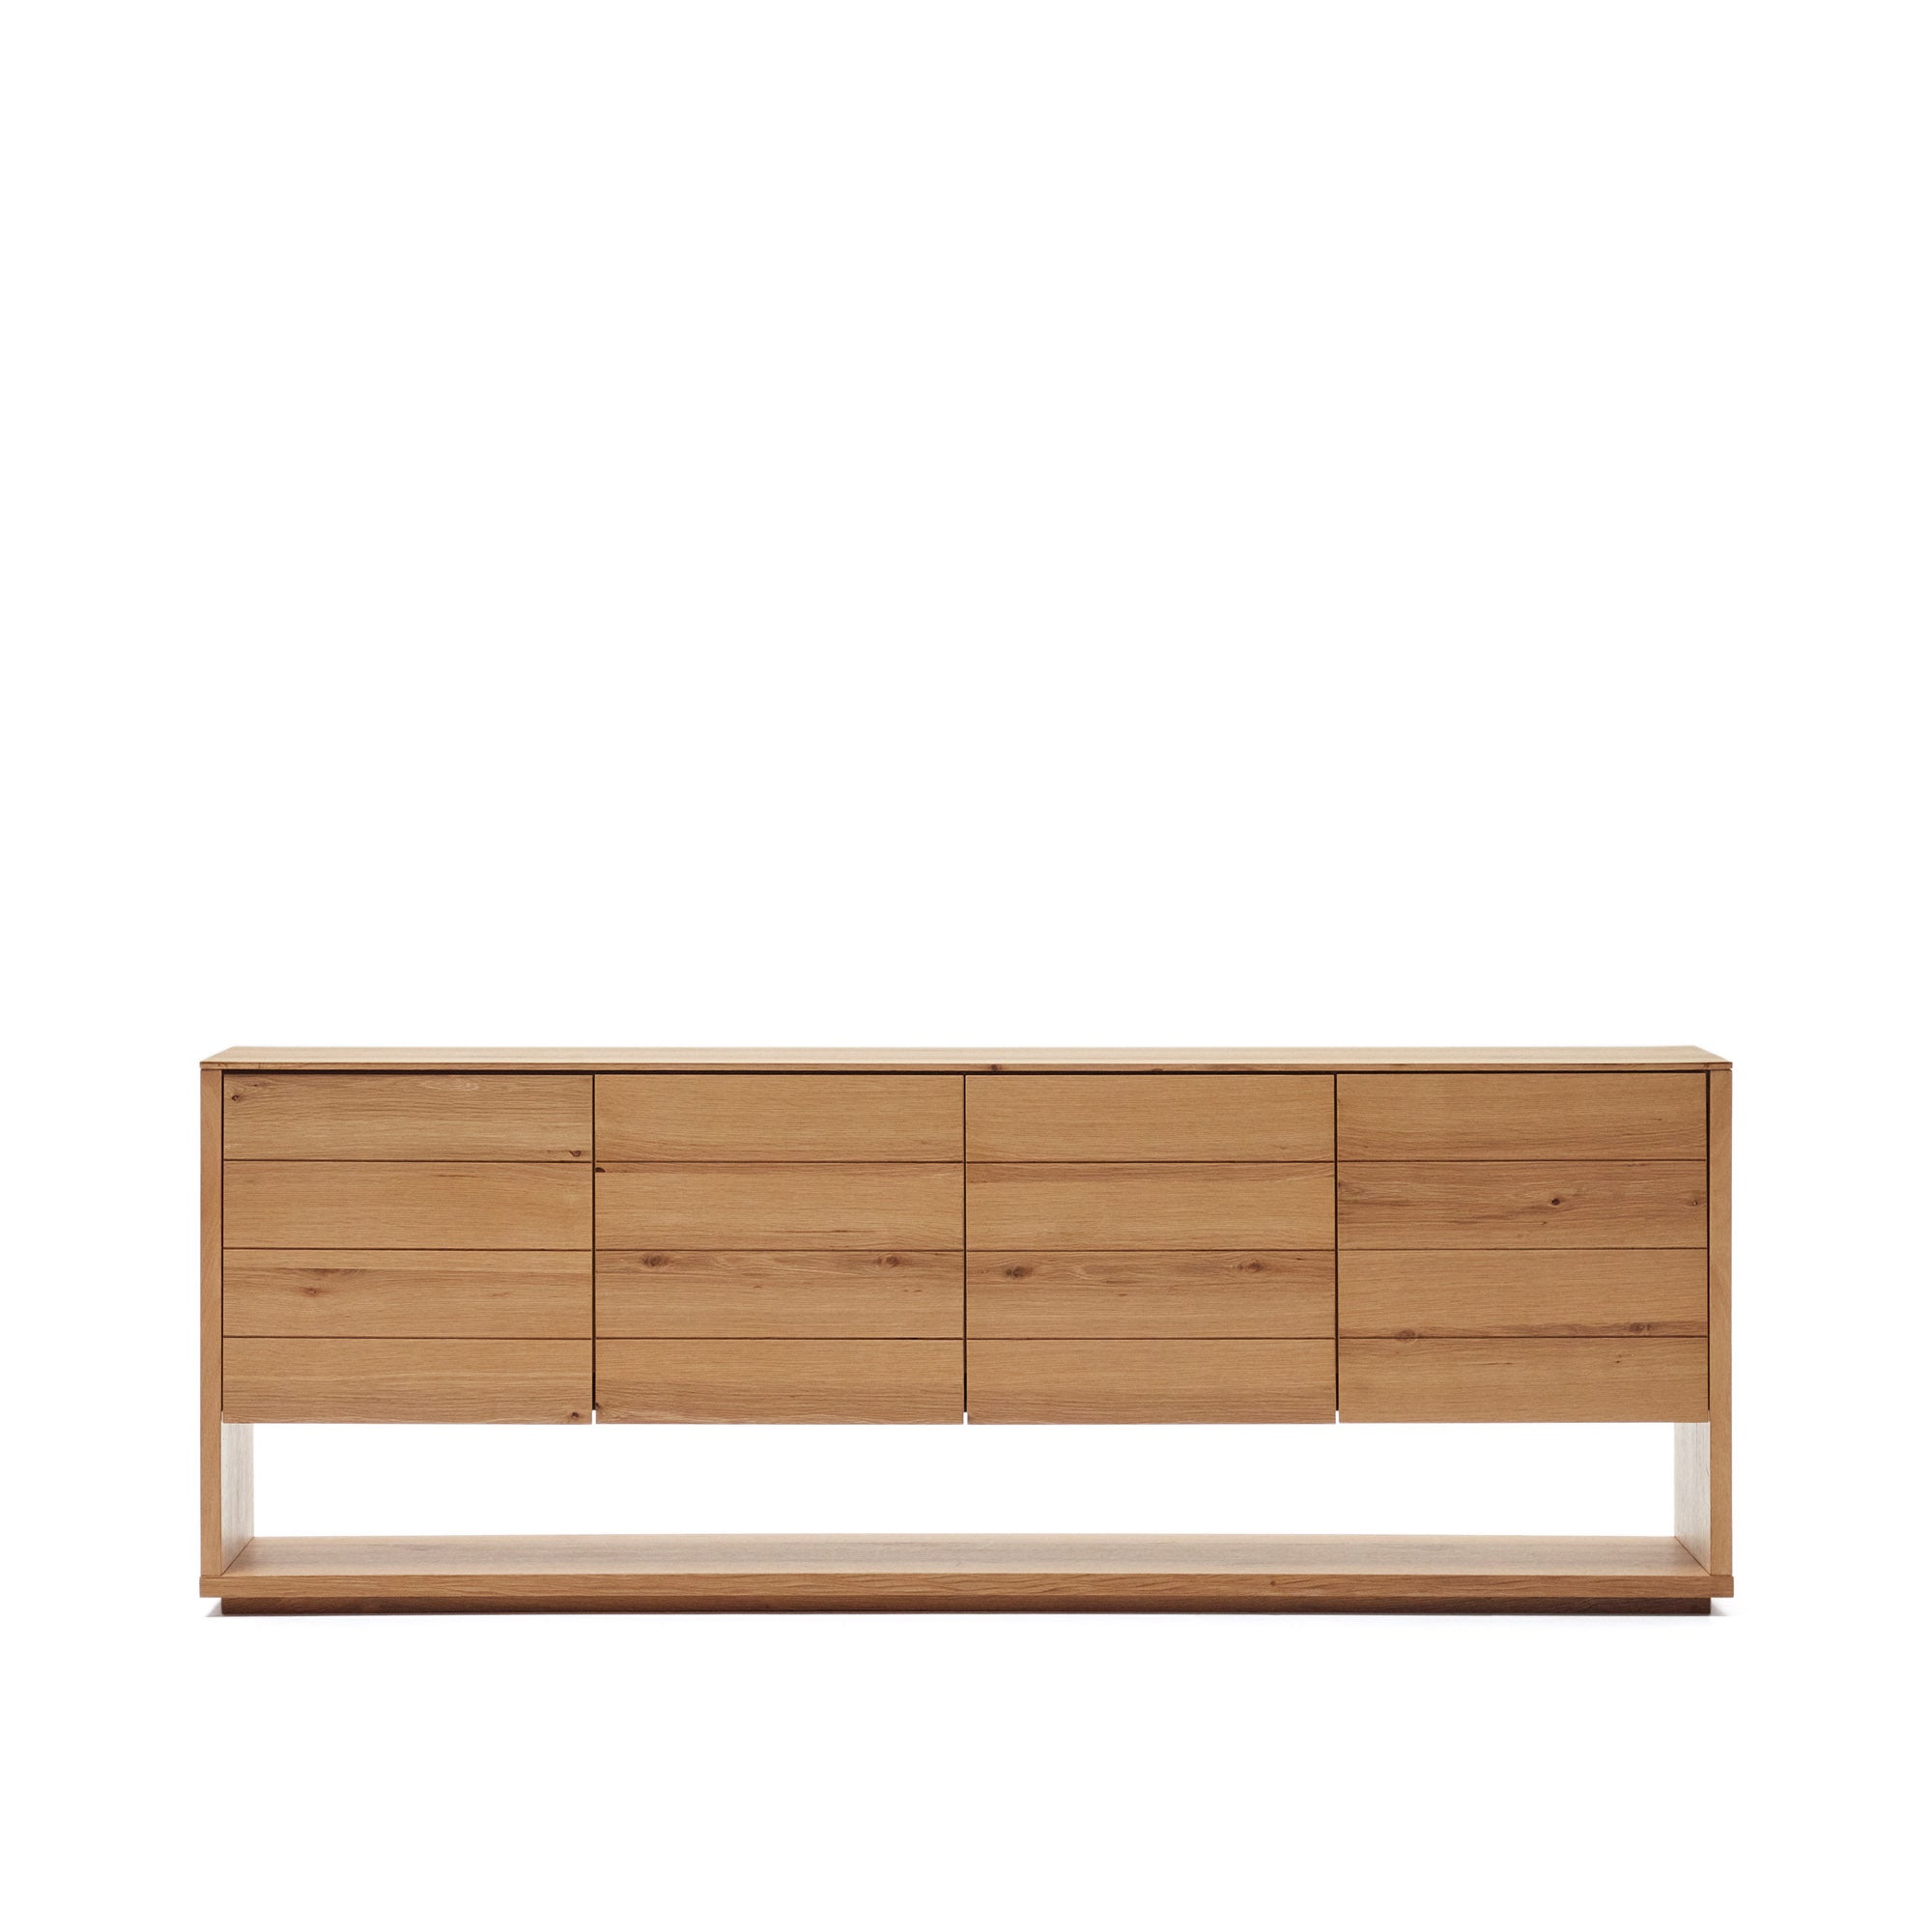 Alguema sideboard with 4 doors in oak veneer with natural finish, 200 x 74 cm